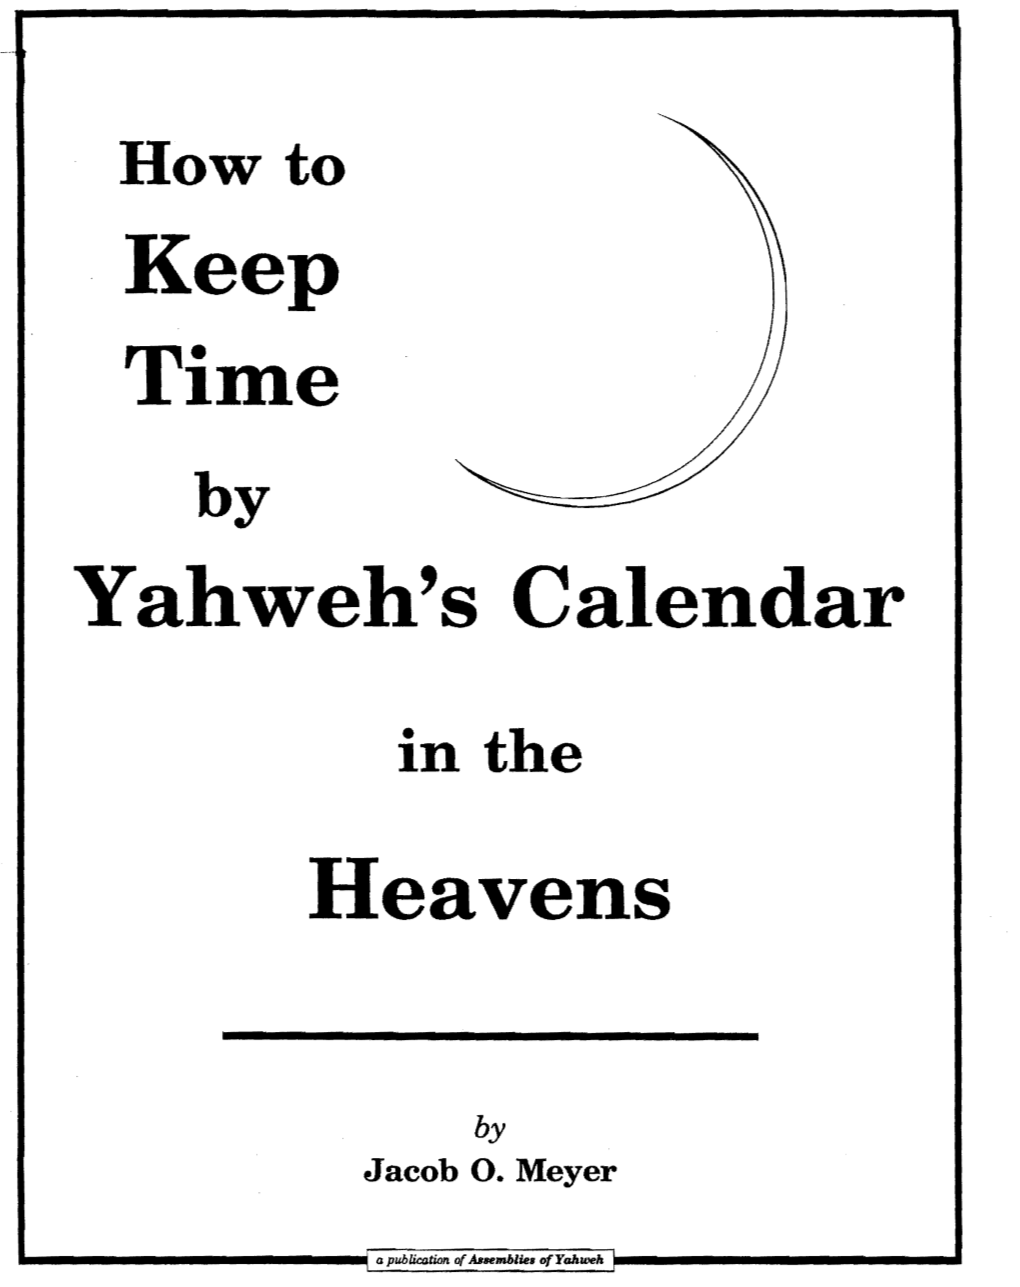 ·Keep Time Yahweh's Calendar Heavens